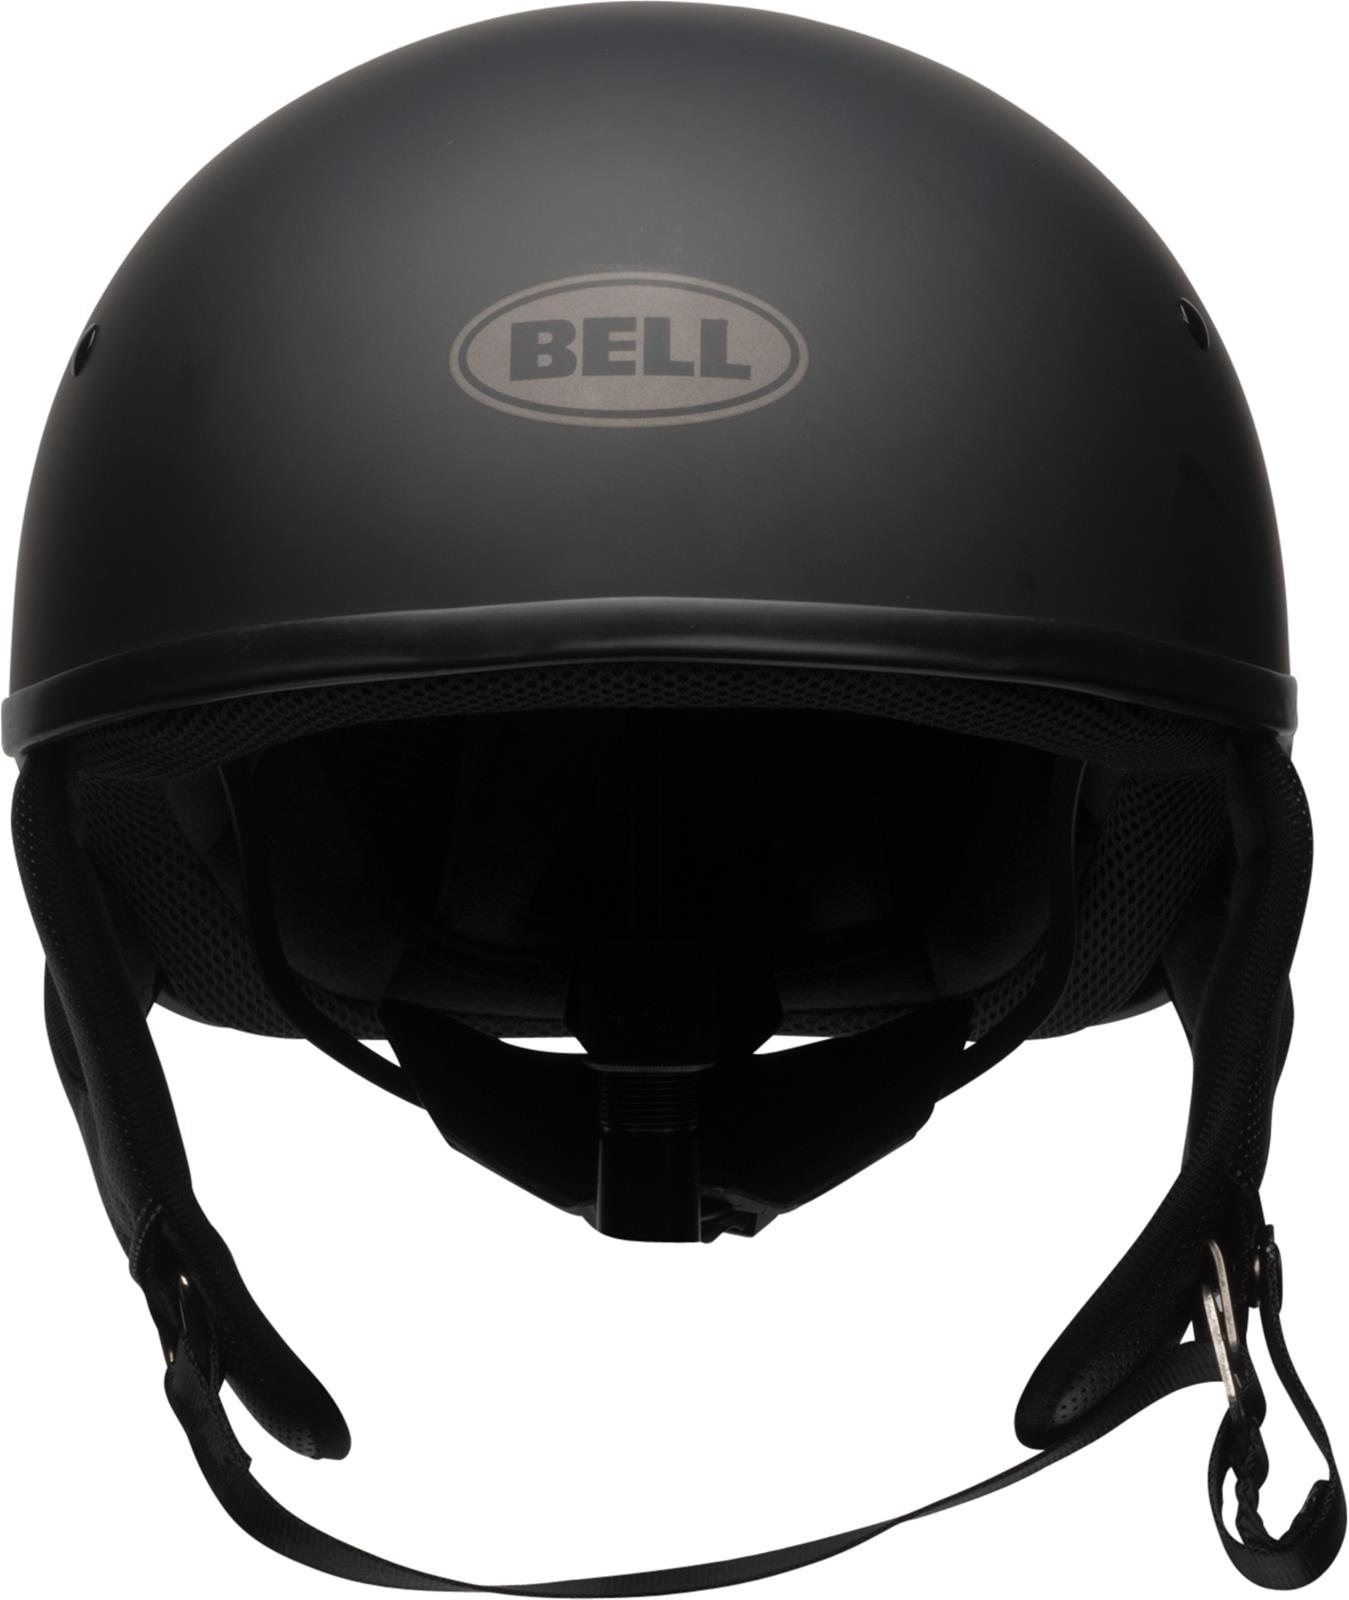 Bell Pit Boss Sport Helmets 7080709 - Free Shipping on ...